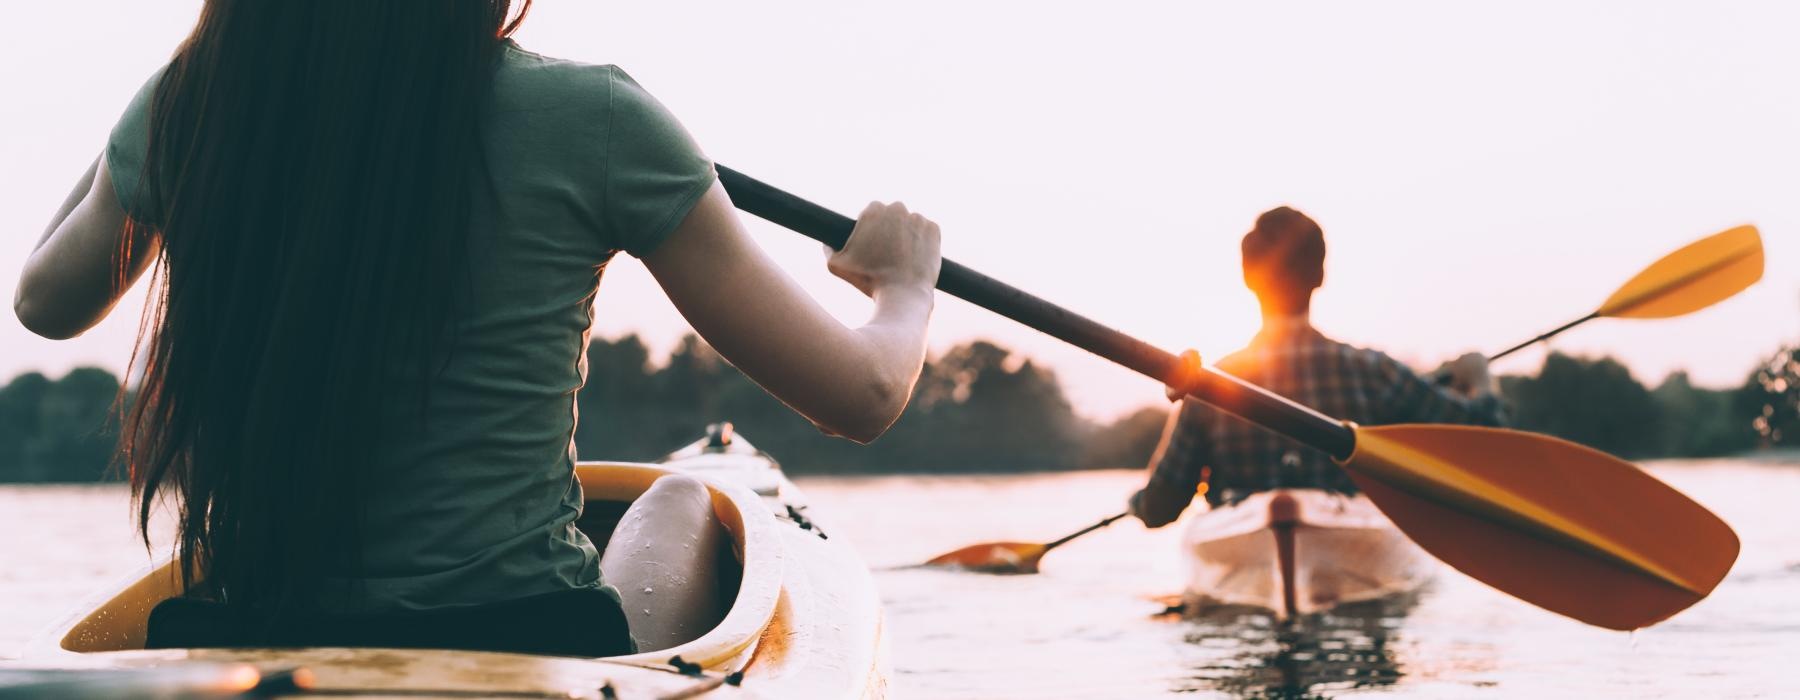 a woman and a man paddling a canoe on a lake